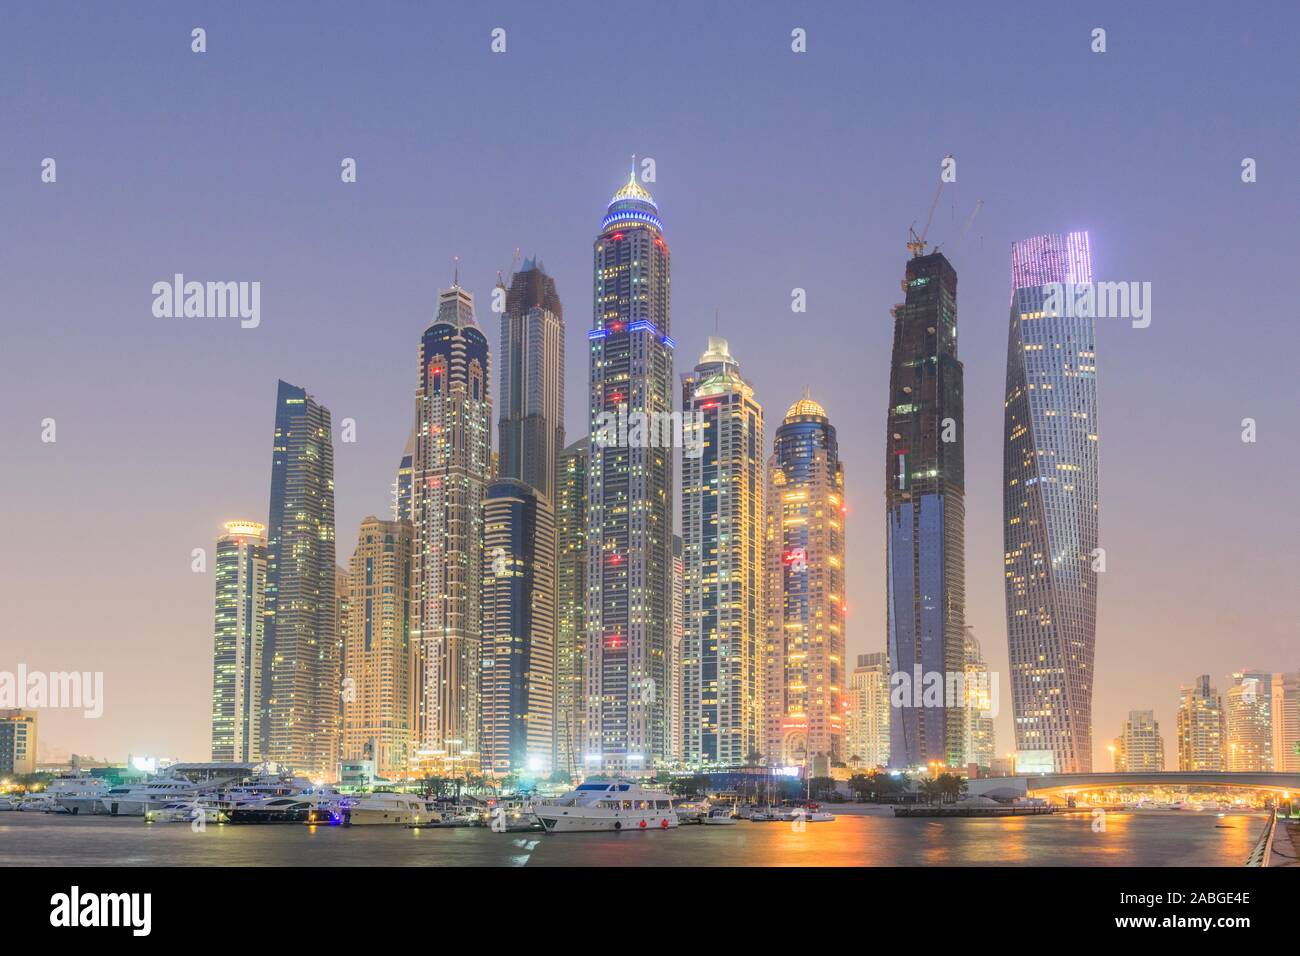 Night view of skyline of modern skyscrapers in Marina district of Dubai United Arab Emirates Stock Photo